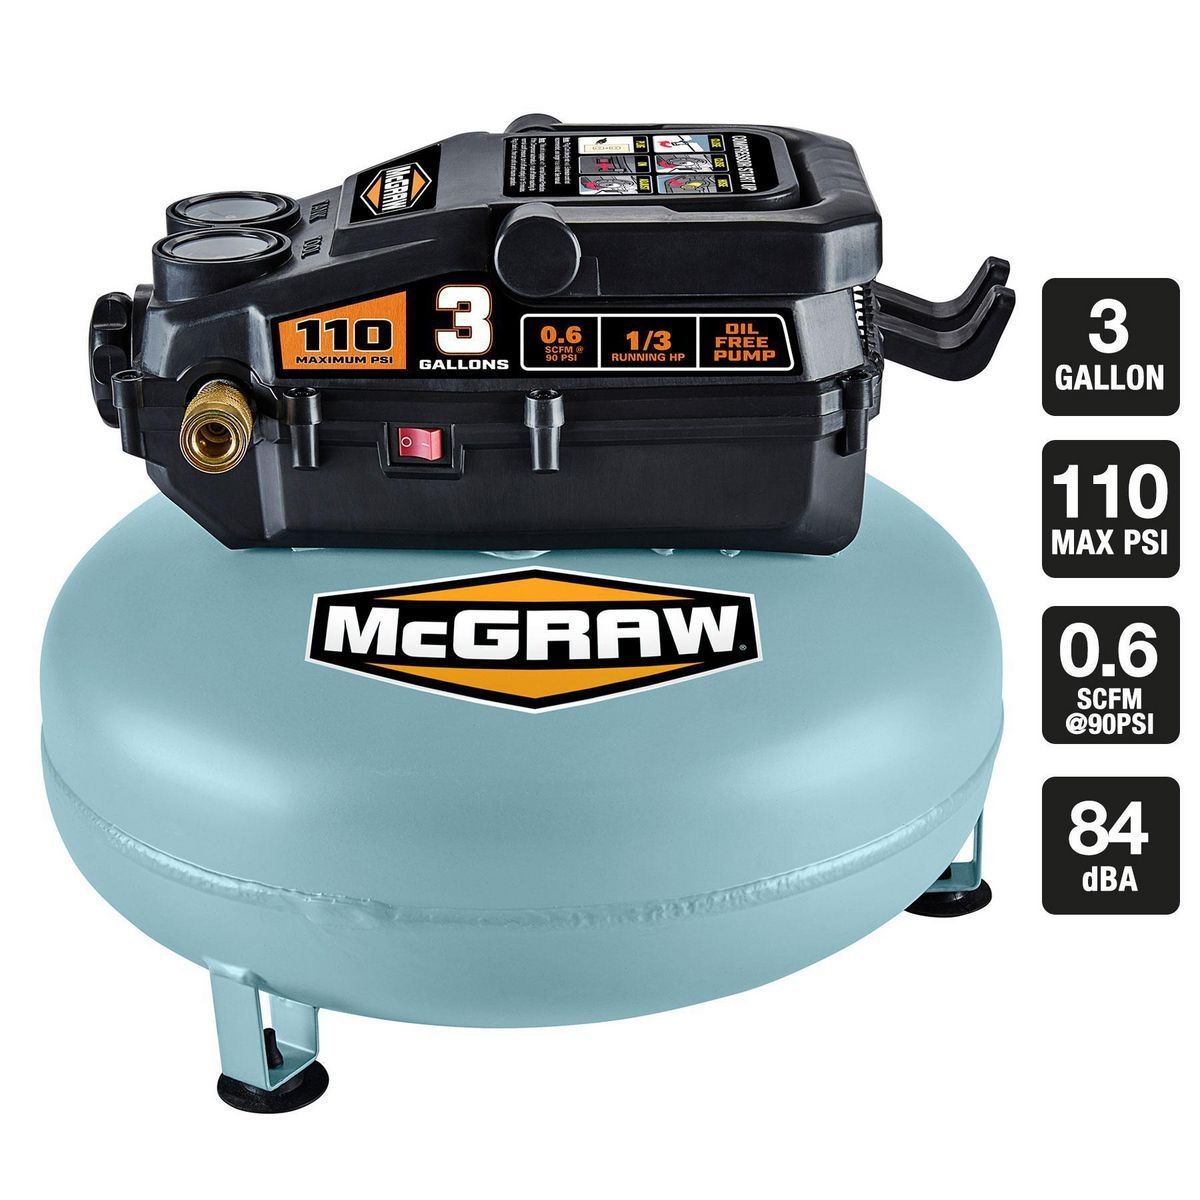 MCGRAW 3 Gallon 1/3 HP 110 PSI Oil-Free Pancake Air Compressor